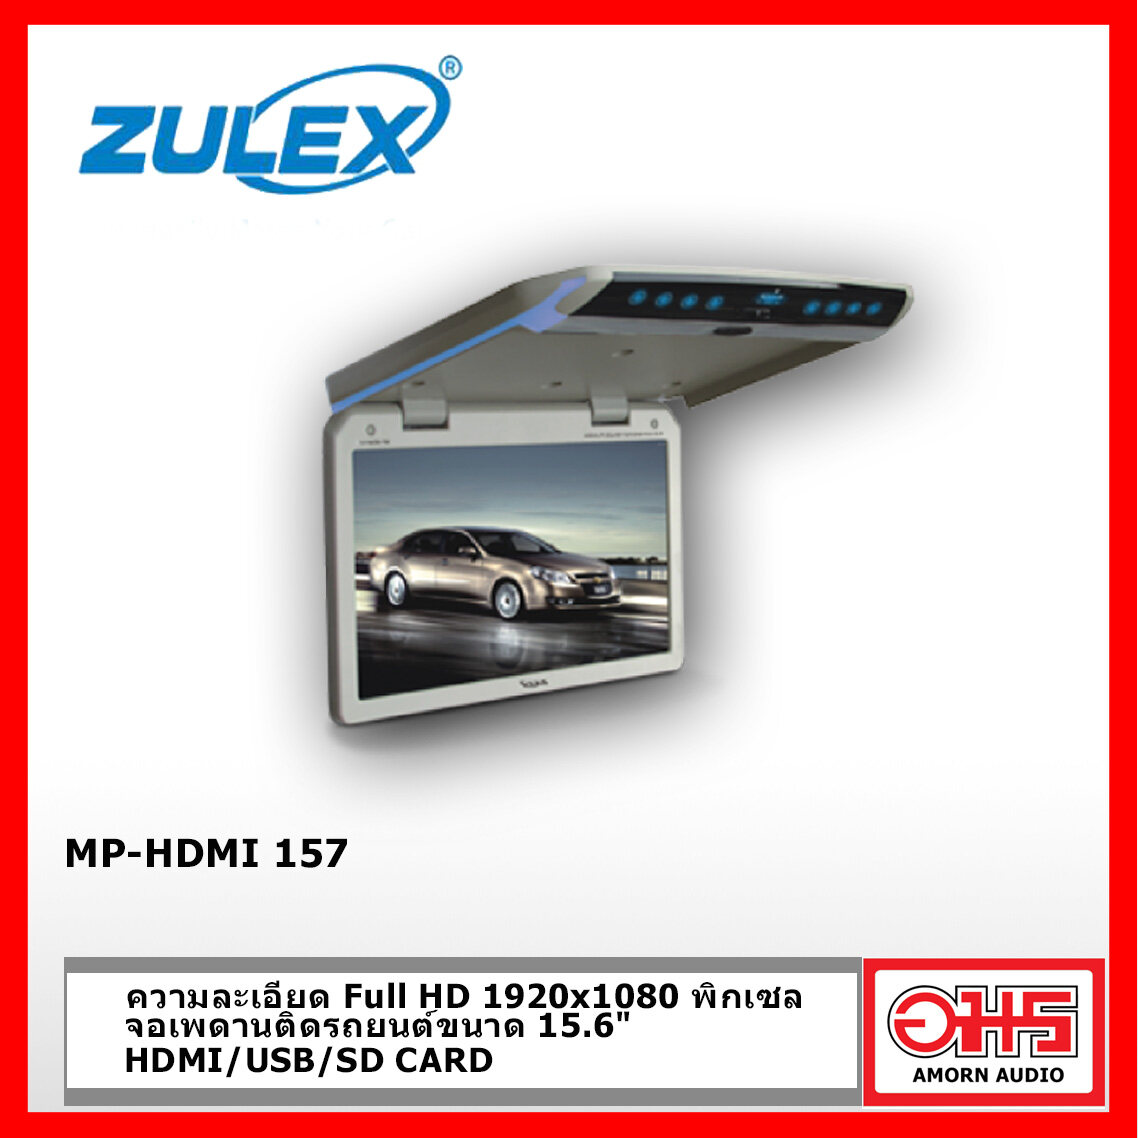 Zulex MP-HDMI 157 ทีวีเพดานติดรถยนต์ 15นิ้ว AMORNAUDIO อมรออดิโอ